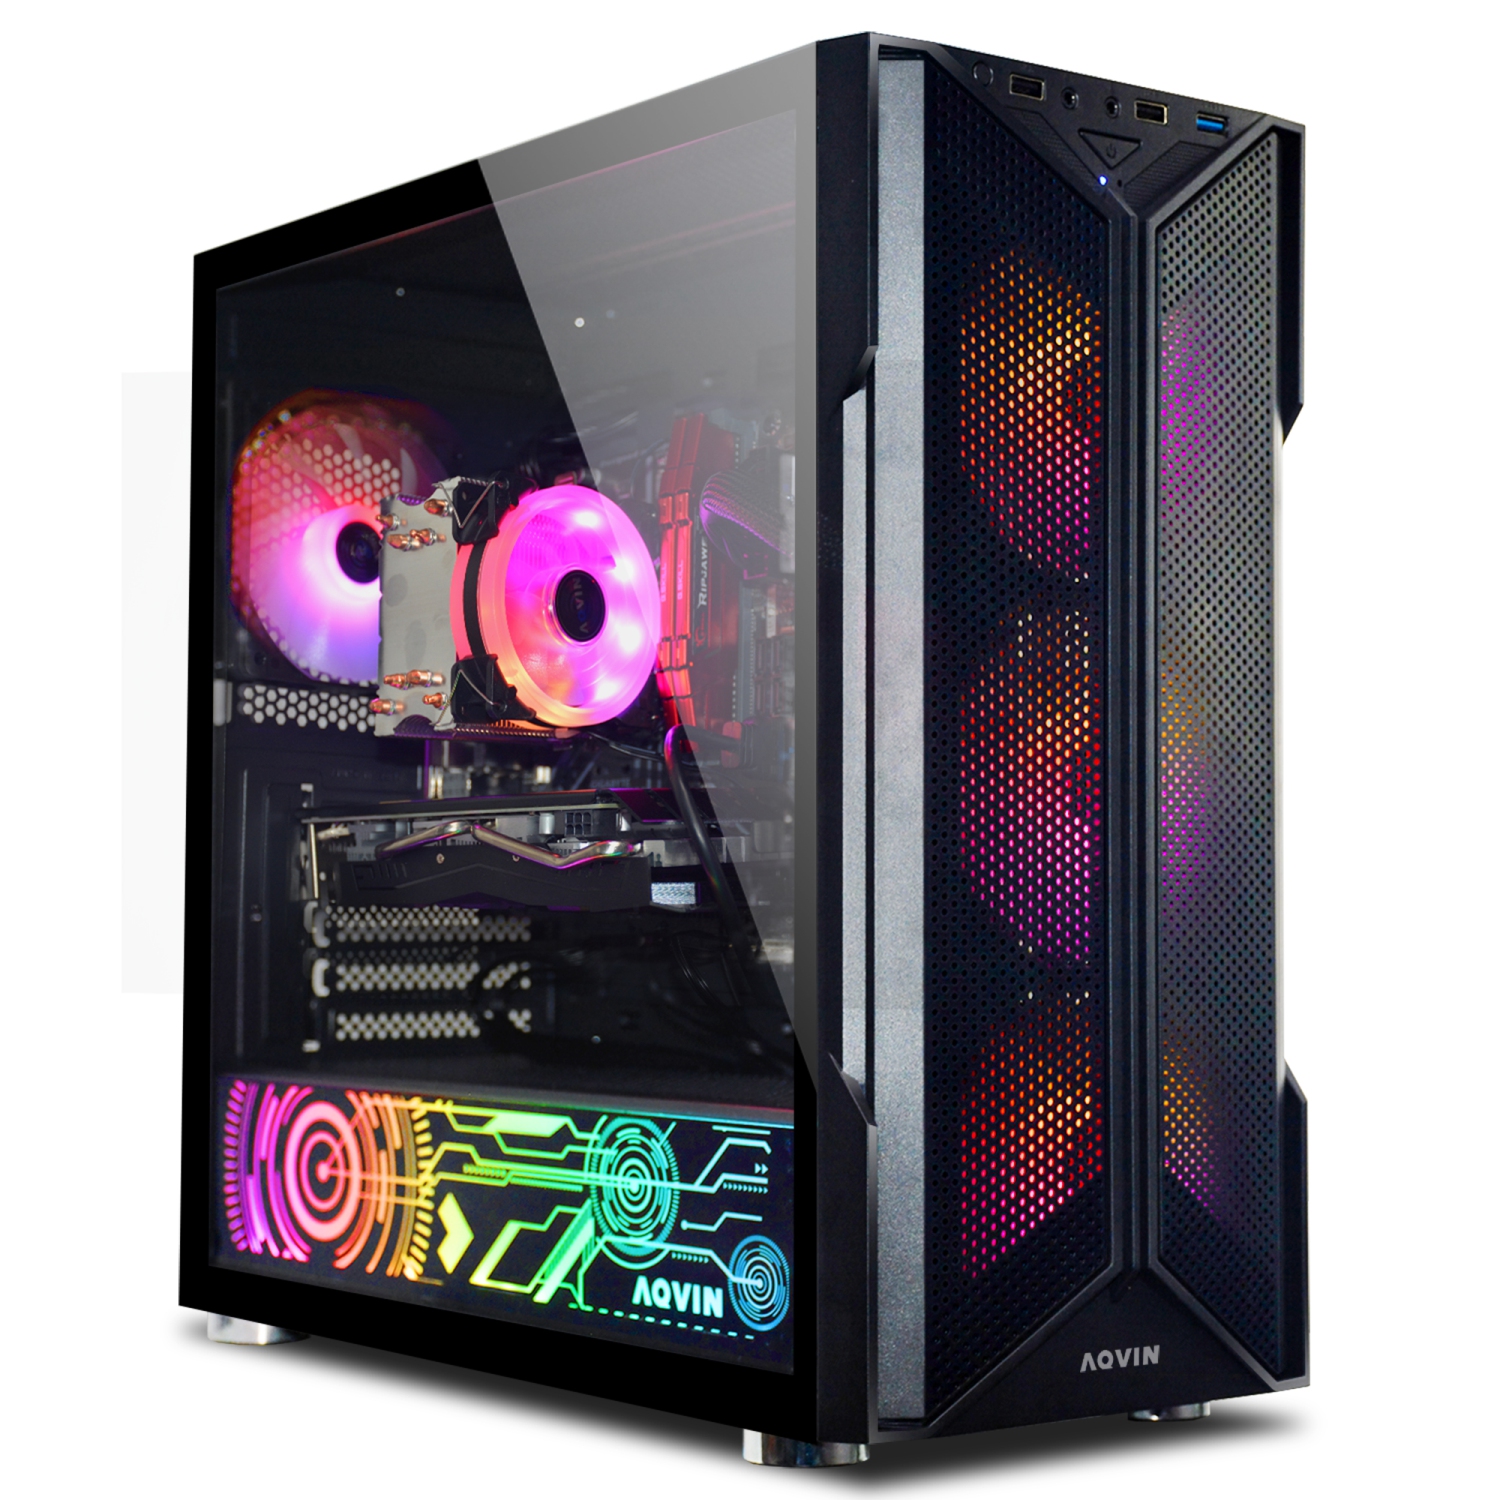 AQVIN-AQ20 Tower Desktop Computer Gaming PC / Intel Core i7 processor up to 4.00 GHz, 32GB DDR4 RAM, 1TB SSD, GeForce GTX 1660 Super 6GB, Windows 10 Pro